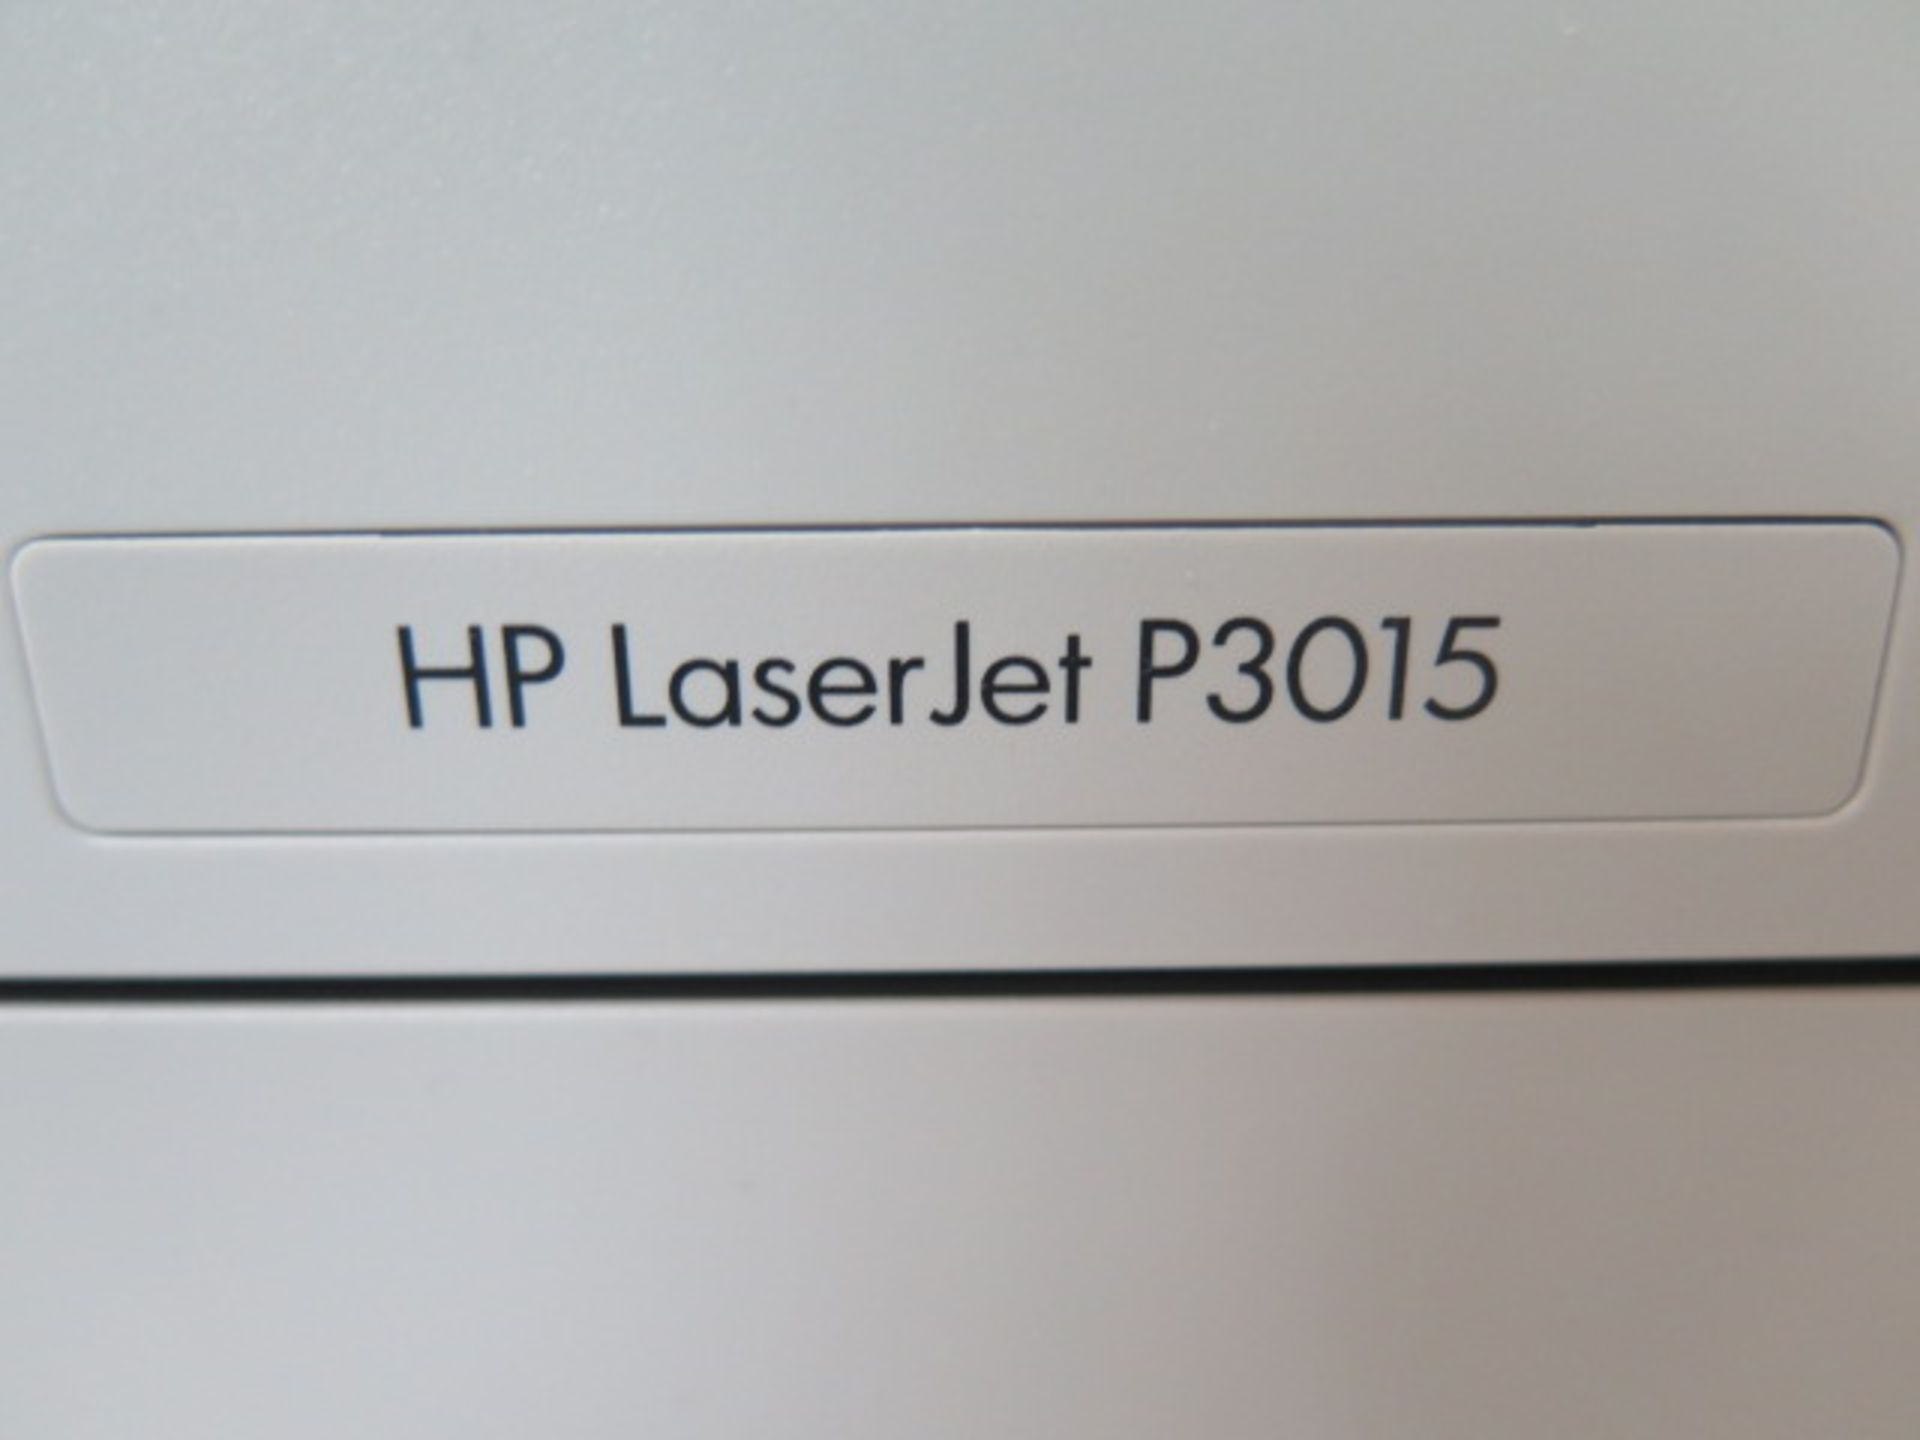 Hhewlett Paackard LaserJet P3015 Printer - Image 2 of 2